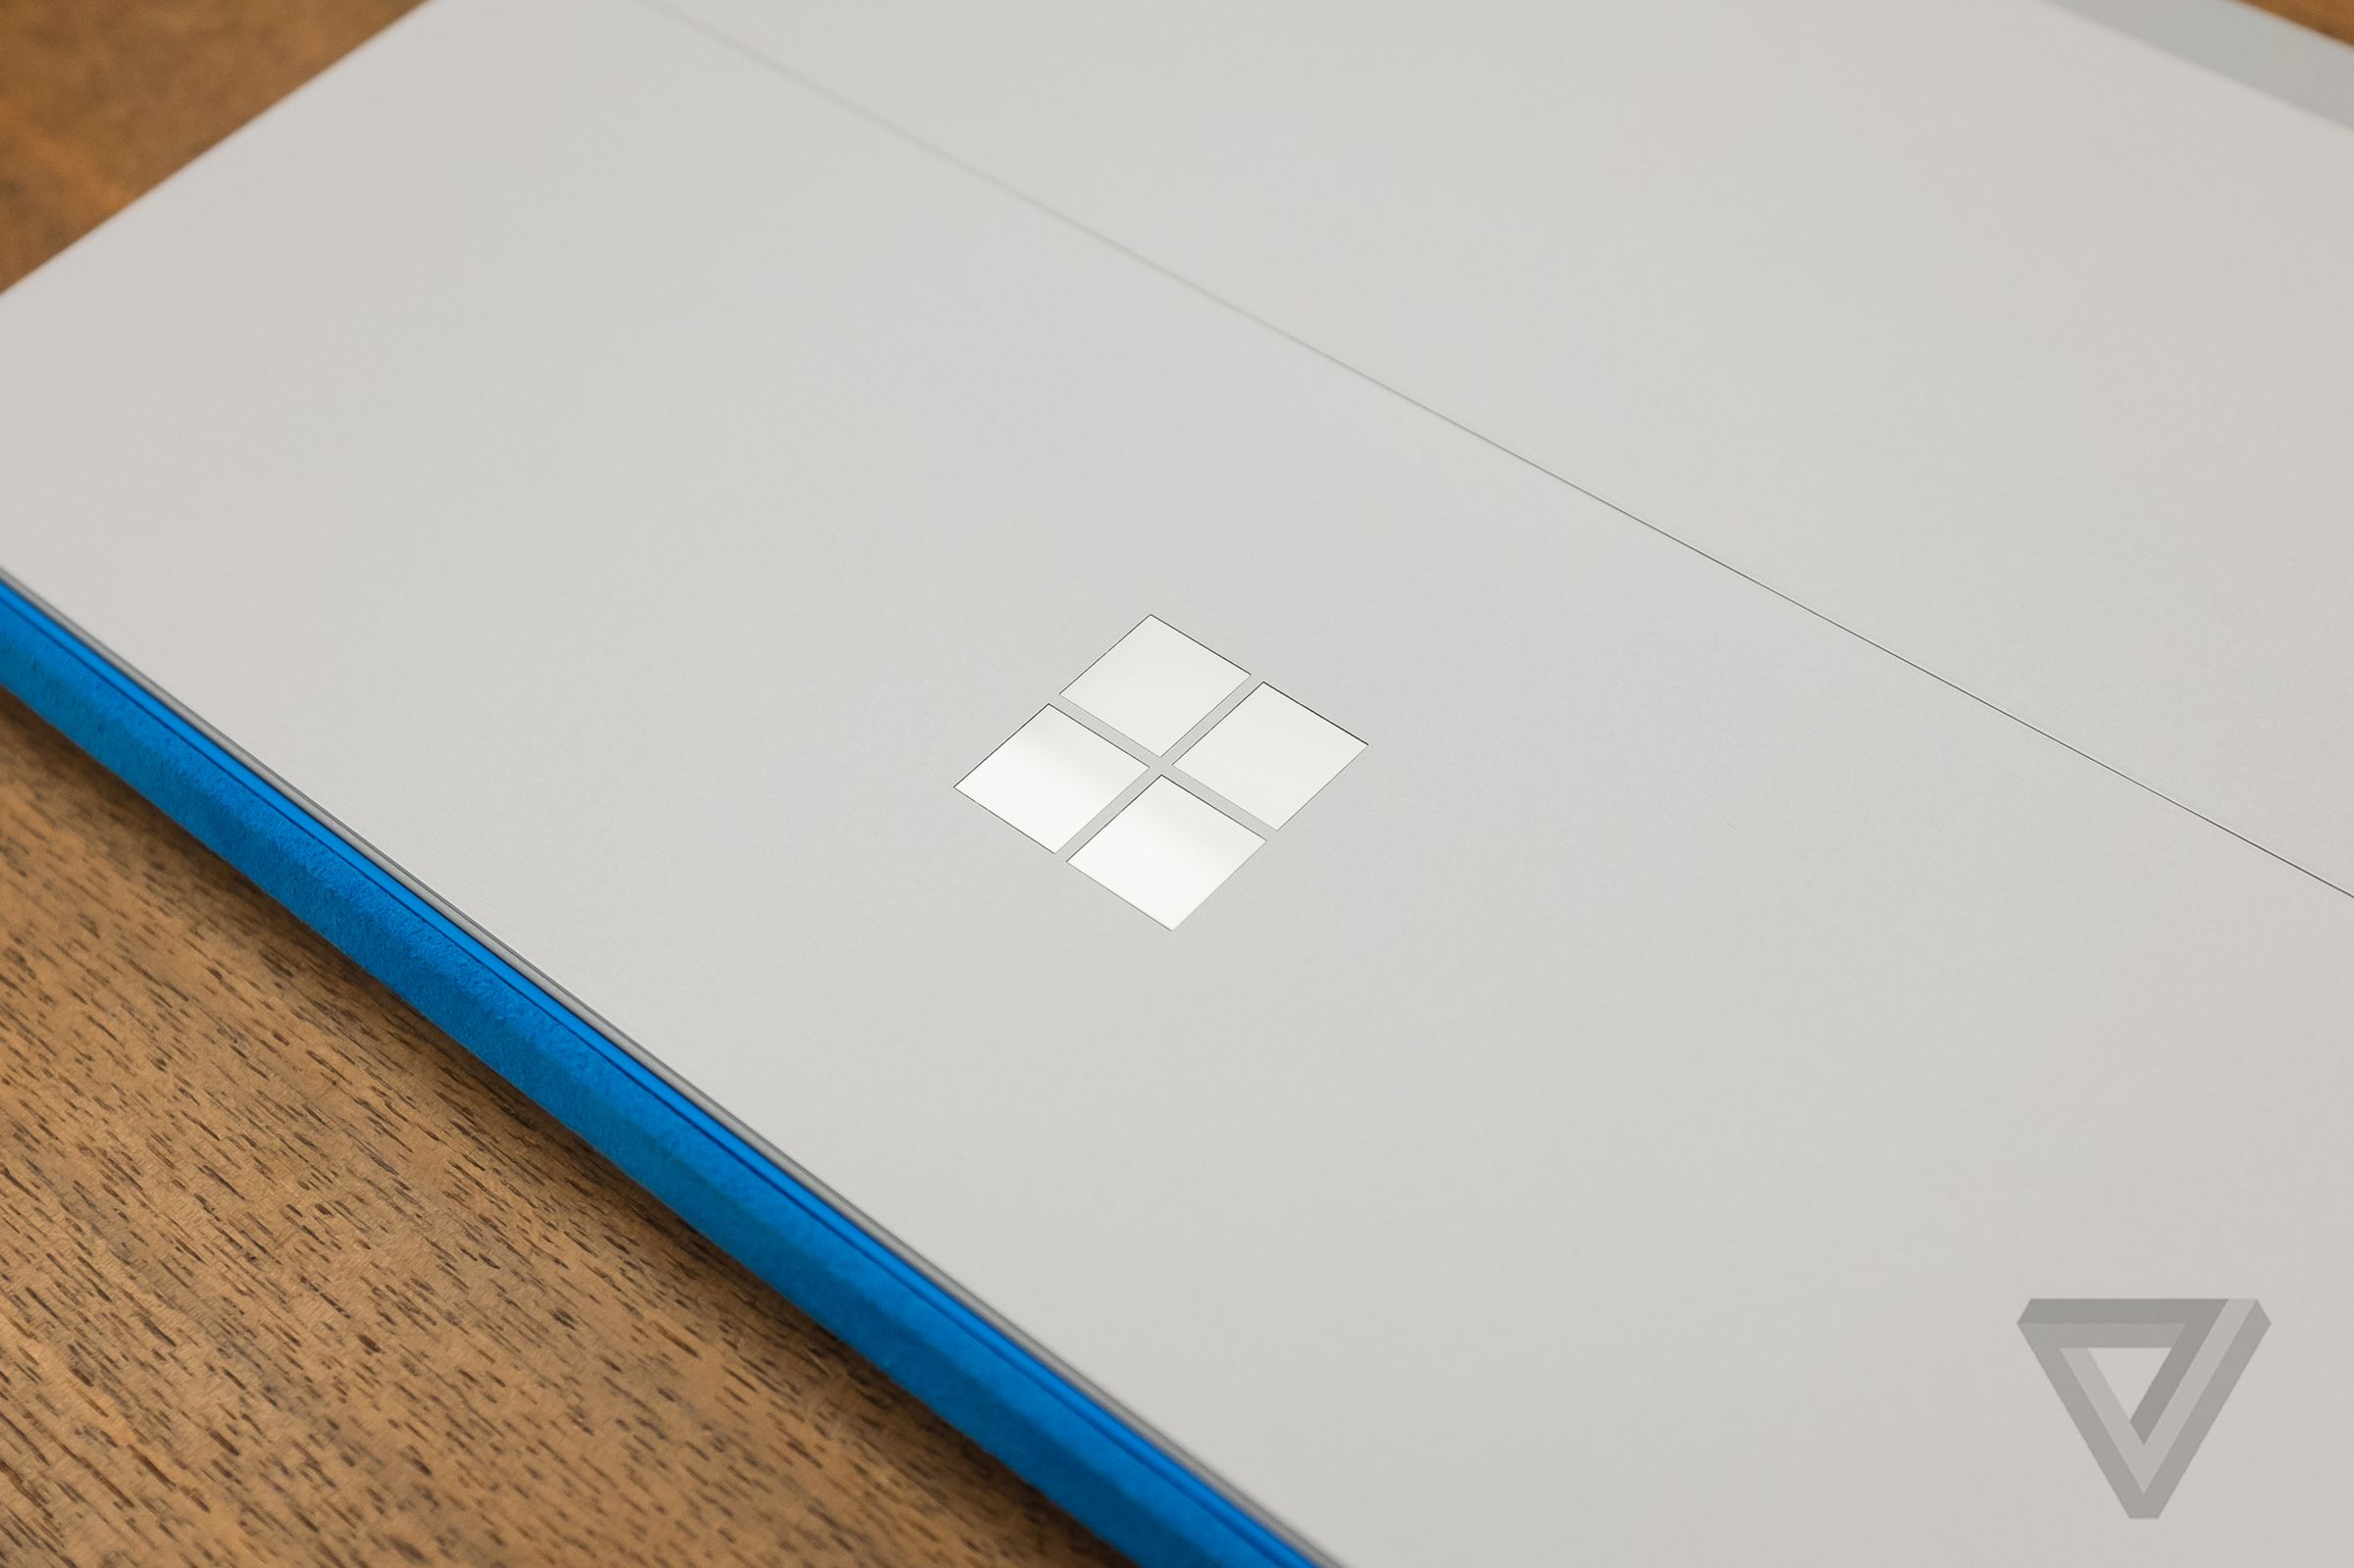 Microsoft Surface 3 hands-on photos